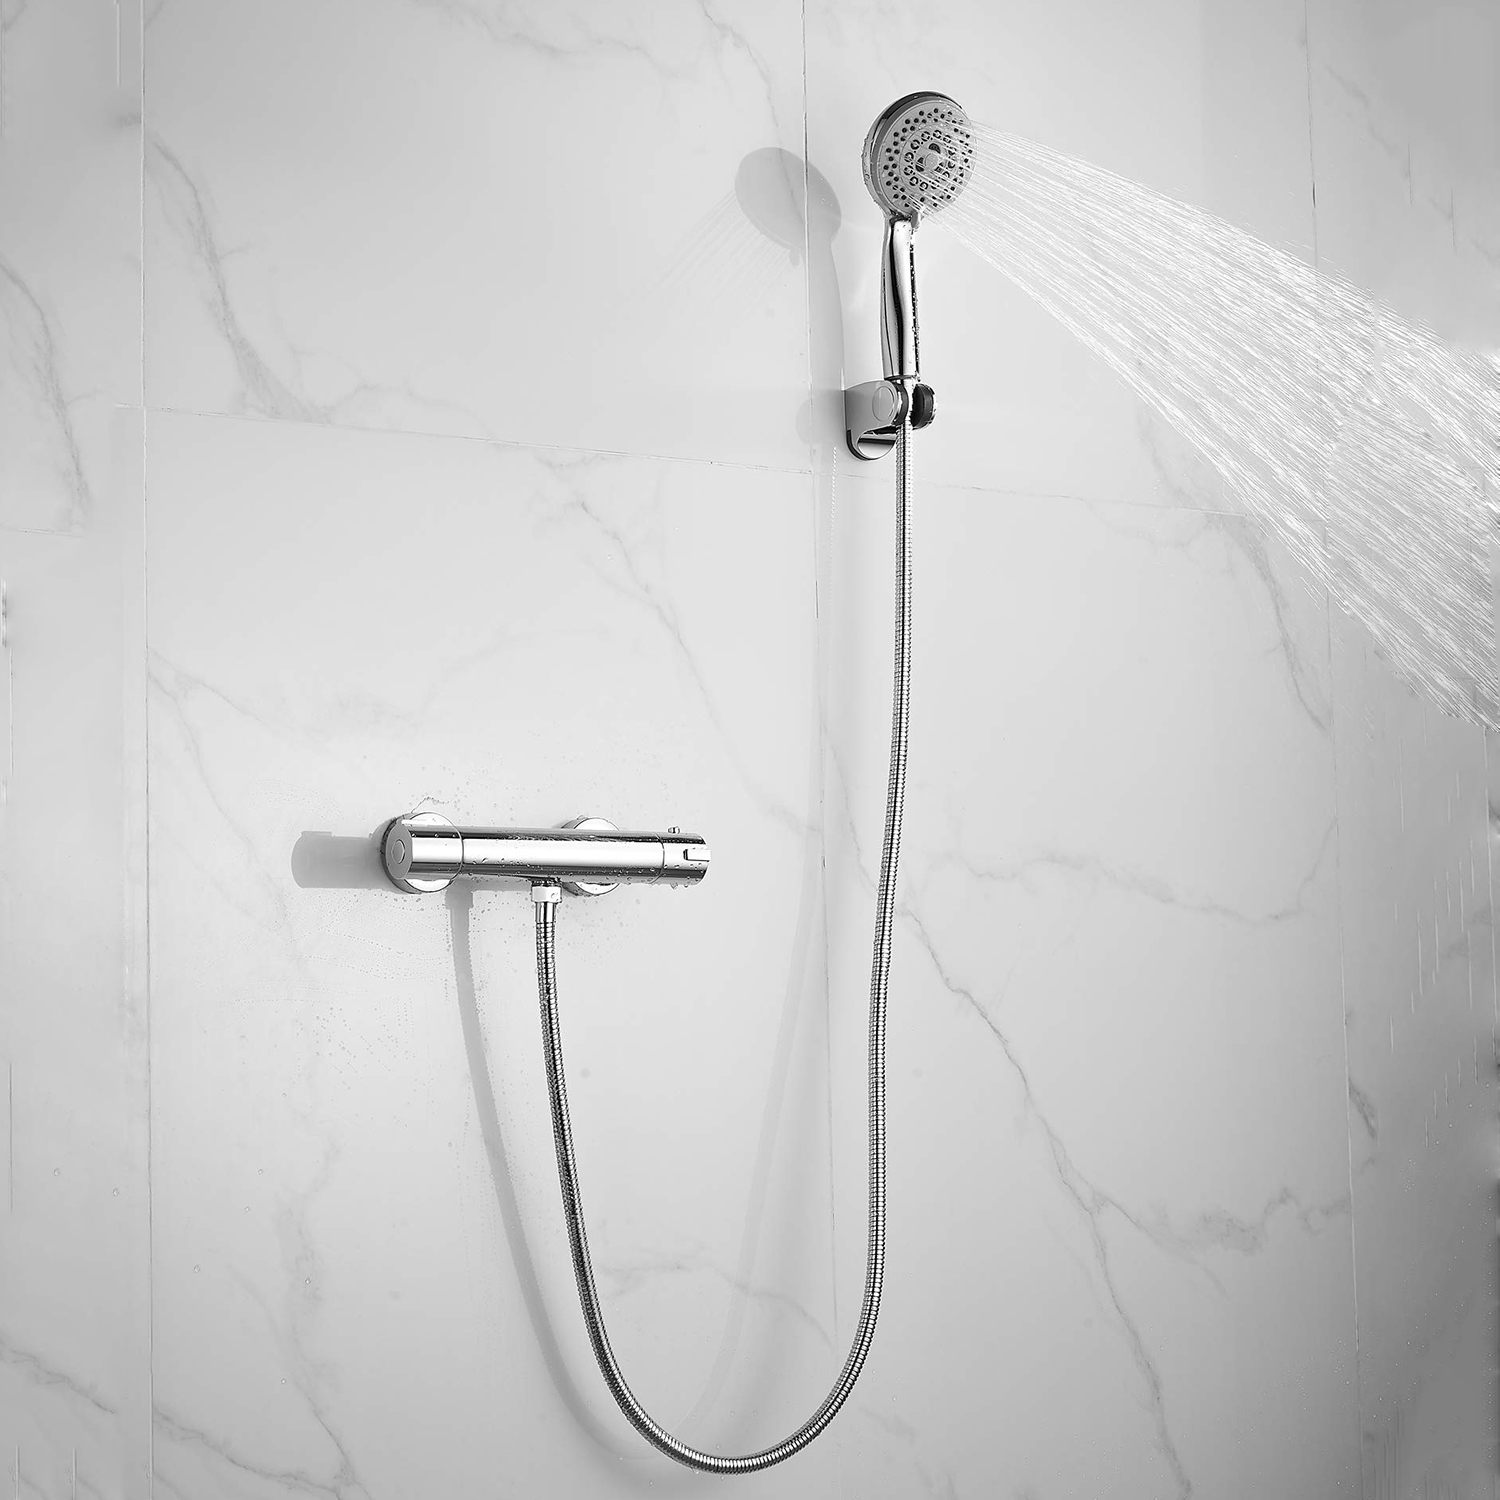 Grifos de válvula mezcladora para barra de ducha termostática para el hogar moderno, salida doble para baño cromado